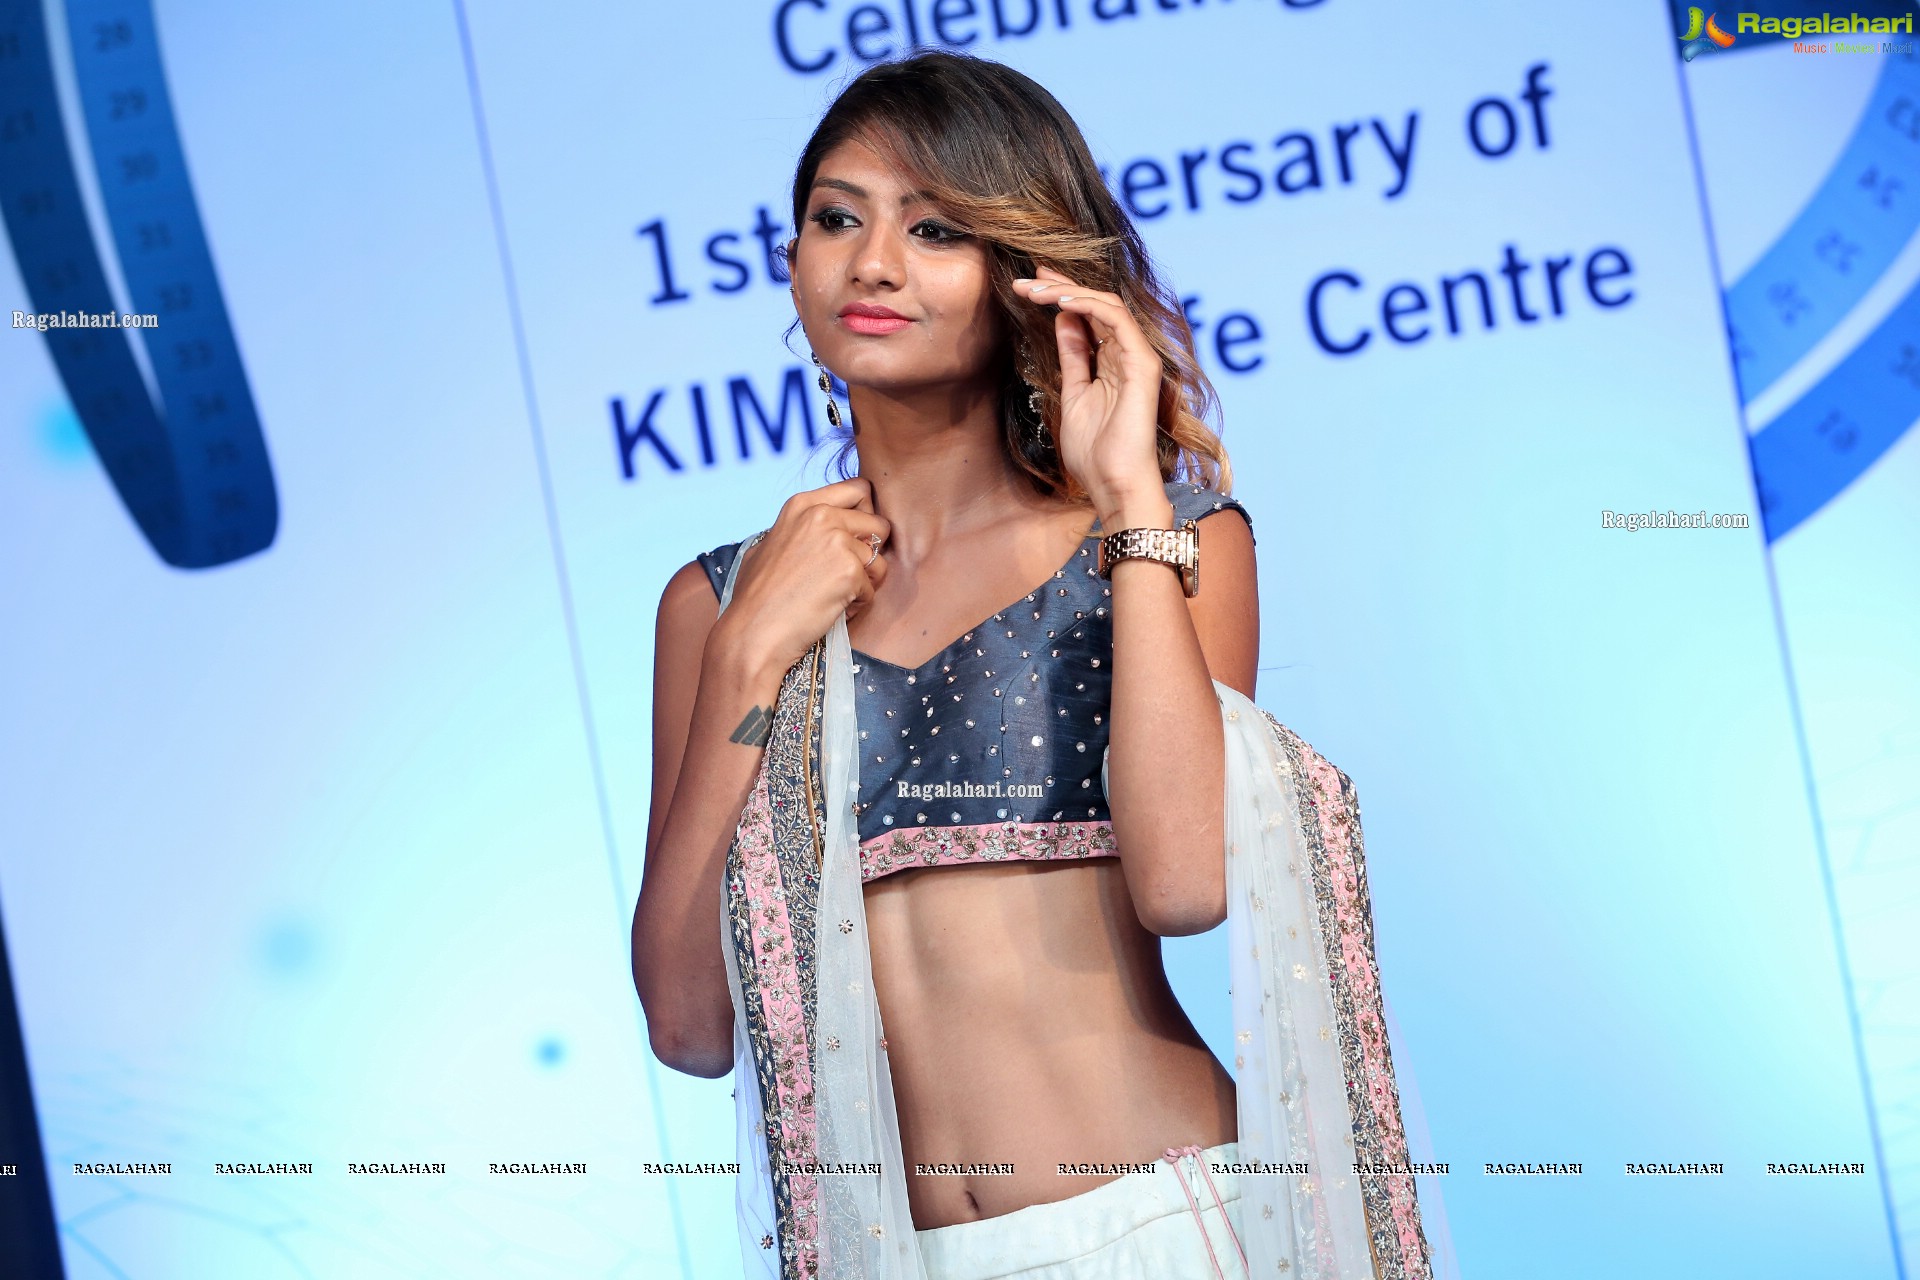 Preksha Kavya @ KIMS LivLife Centre 1st Anniversary Celebrations - HD Gallery